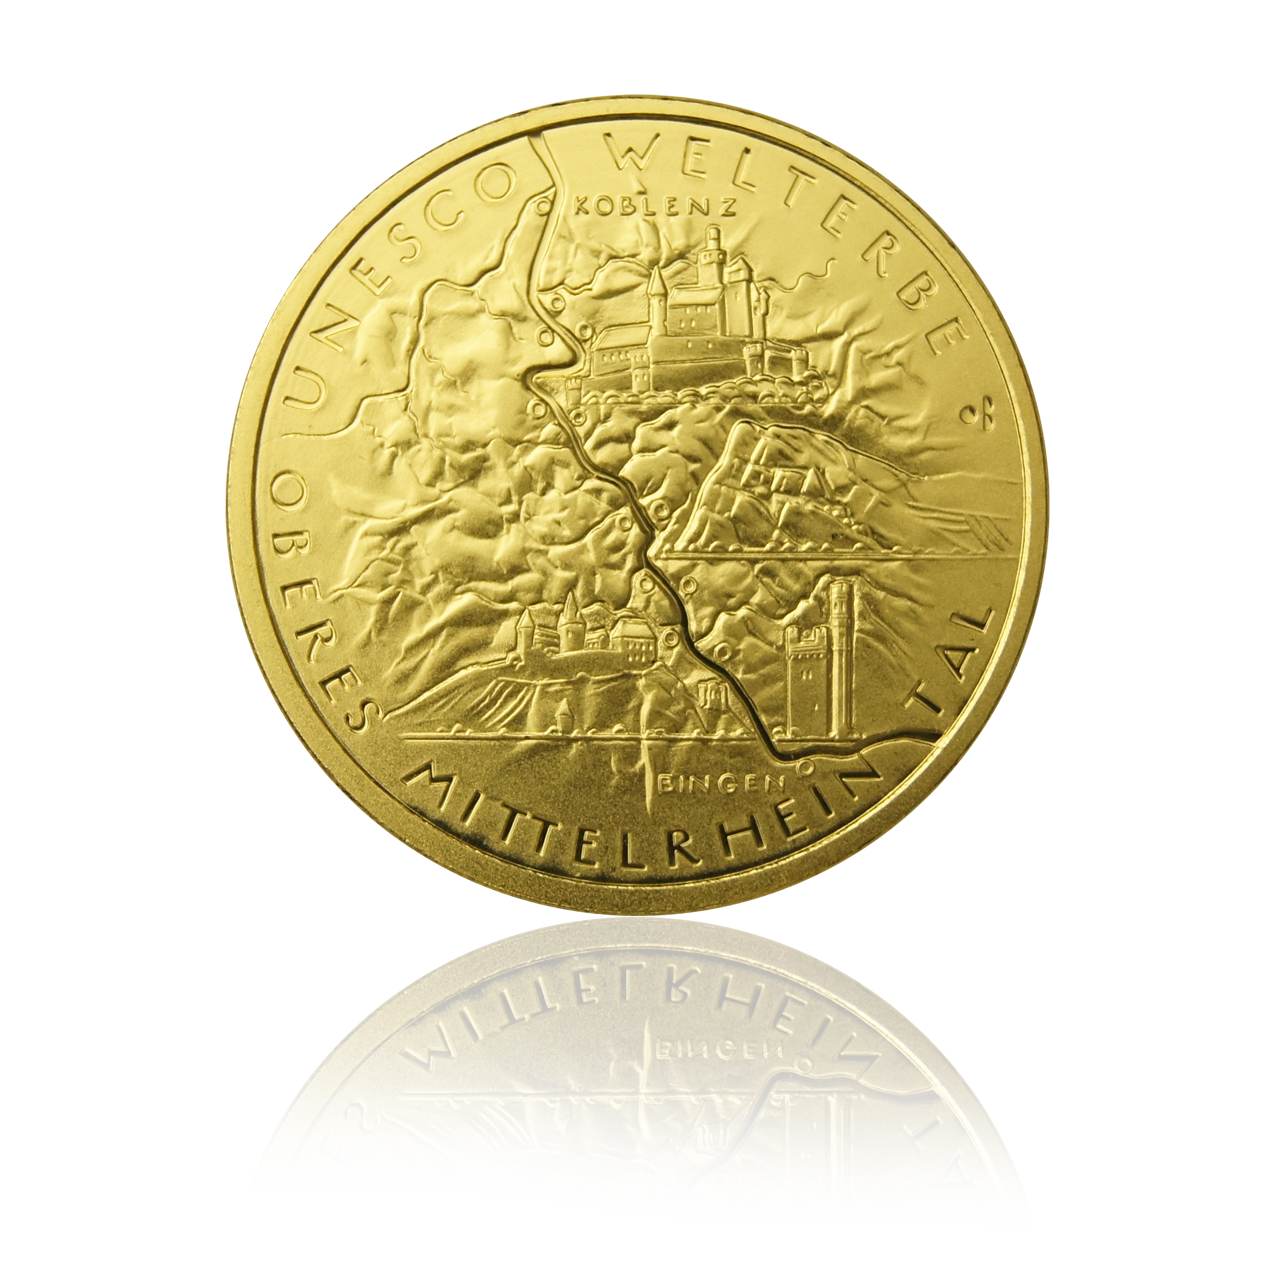 100 Euro gold coin "Oberes Mittelrheintal" 2015 - Germany 1/2 oz gold coin